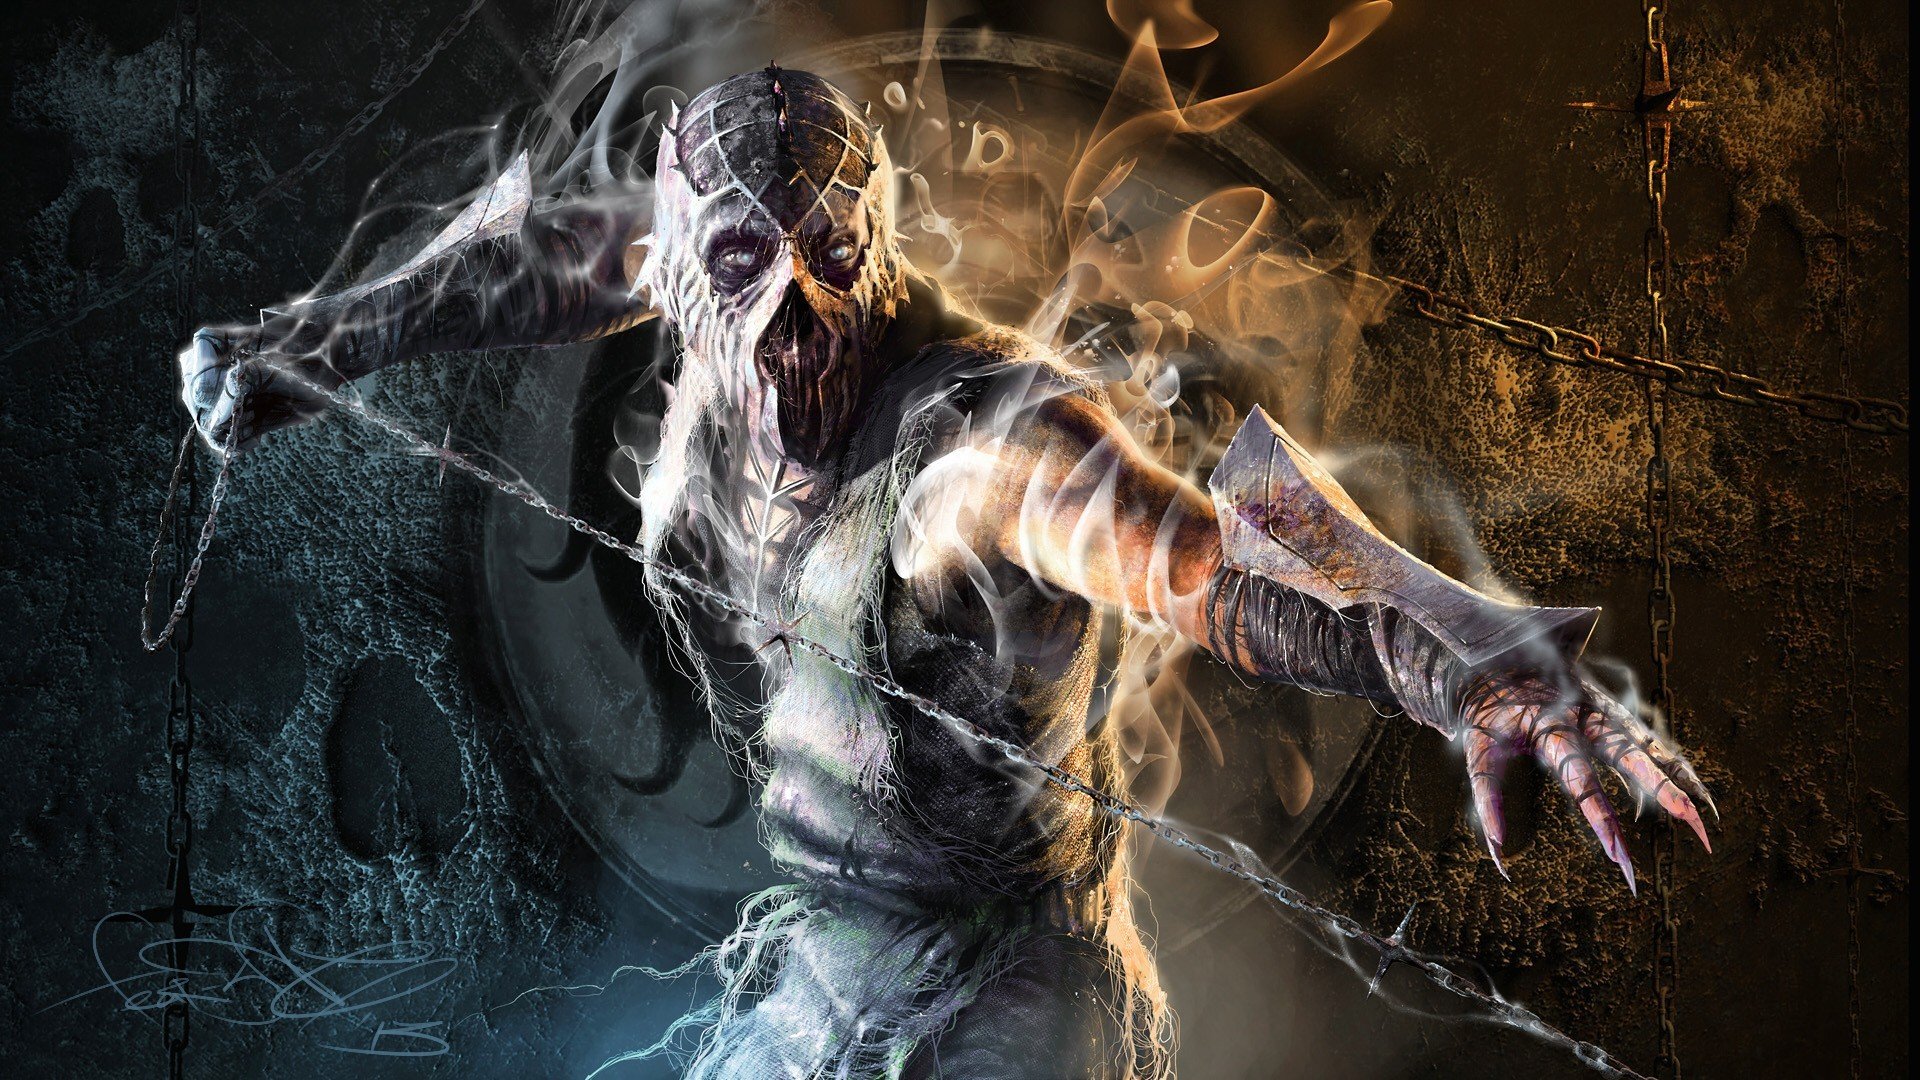 Mortal Kombat, Scorpion (character), PC gaming Wallpaper